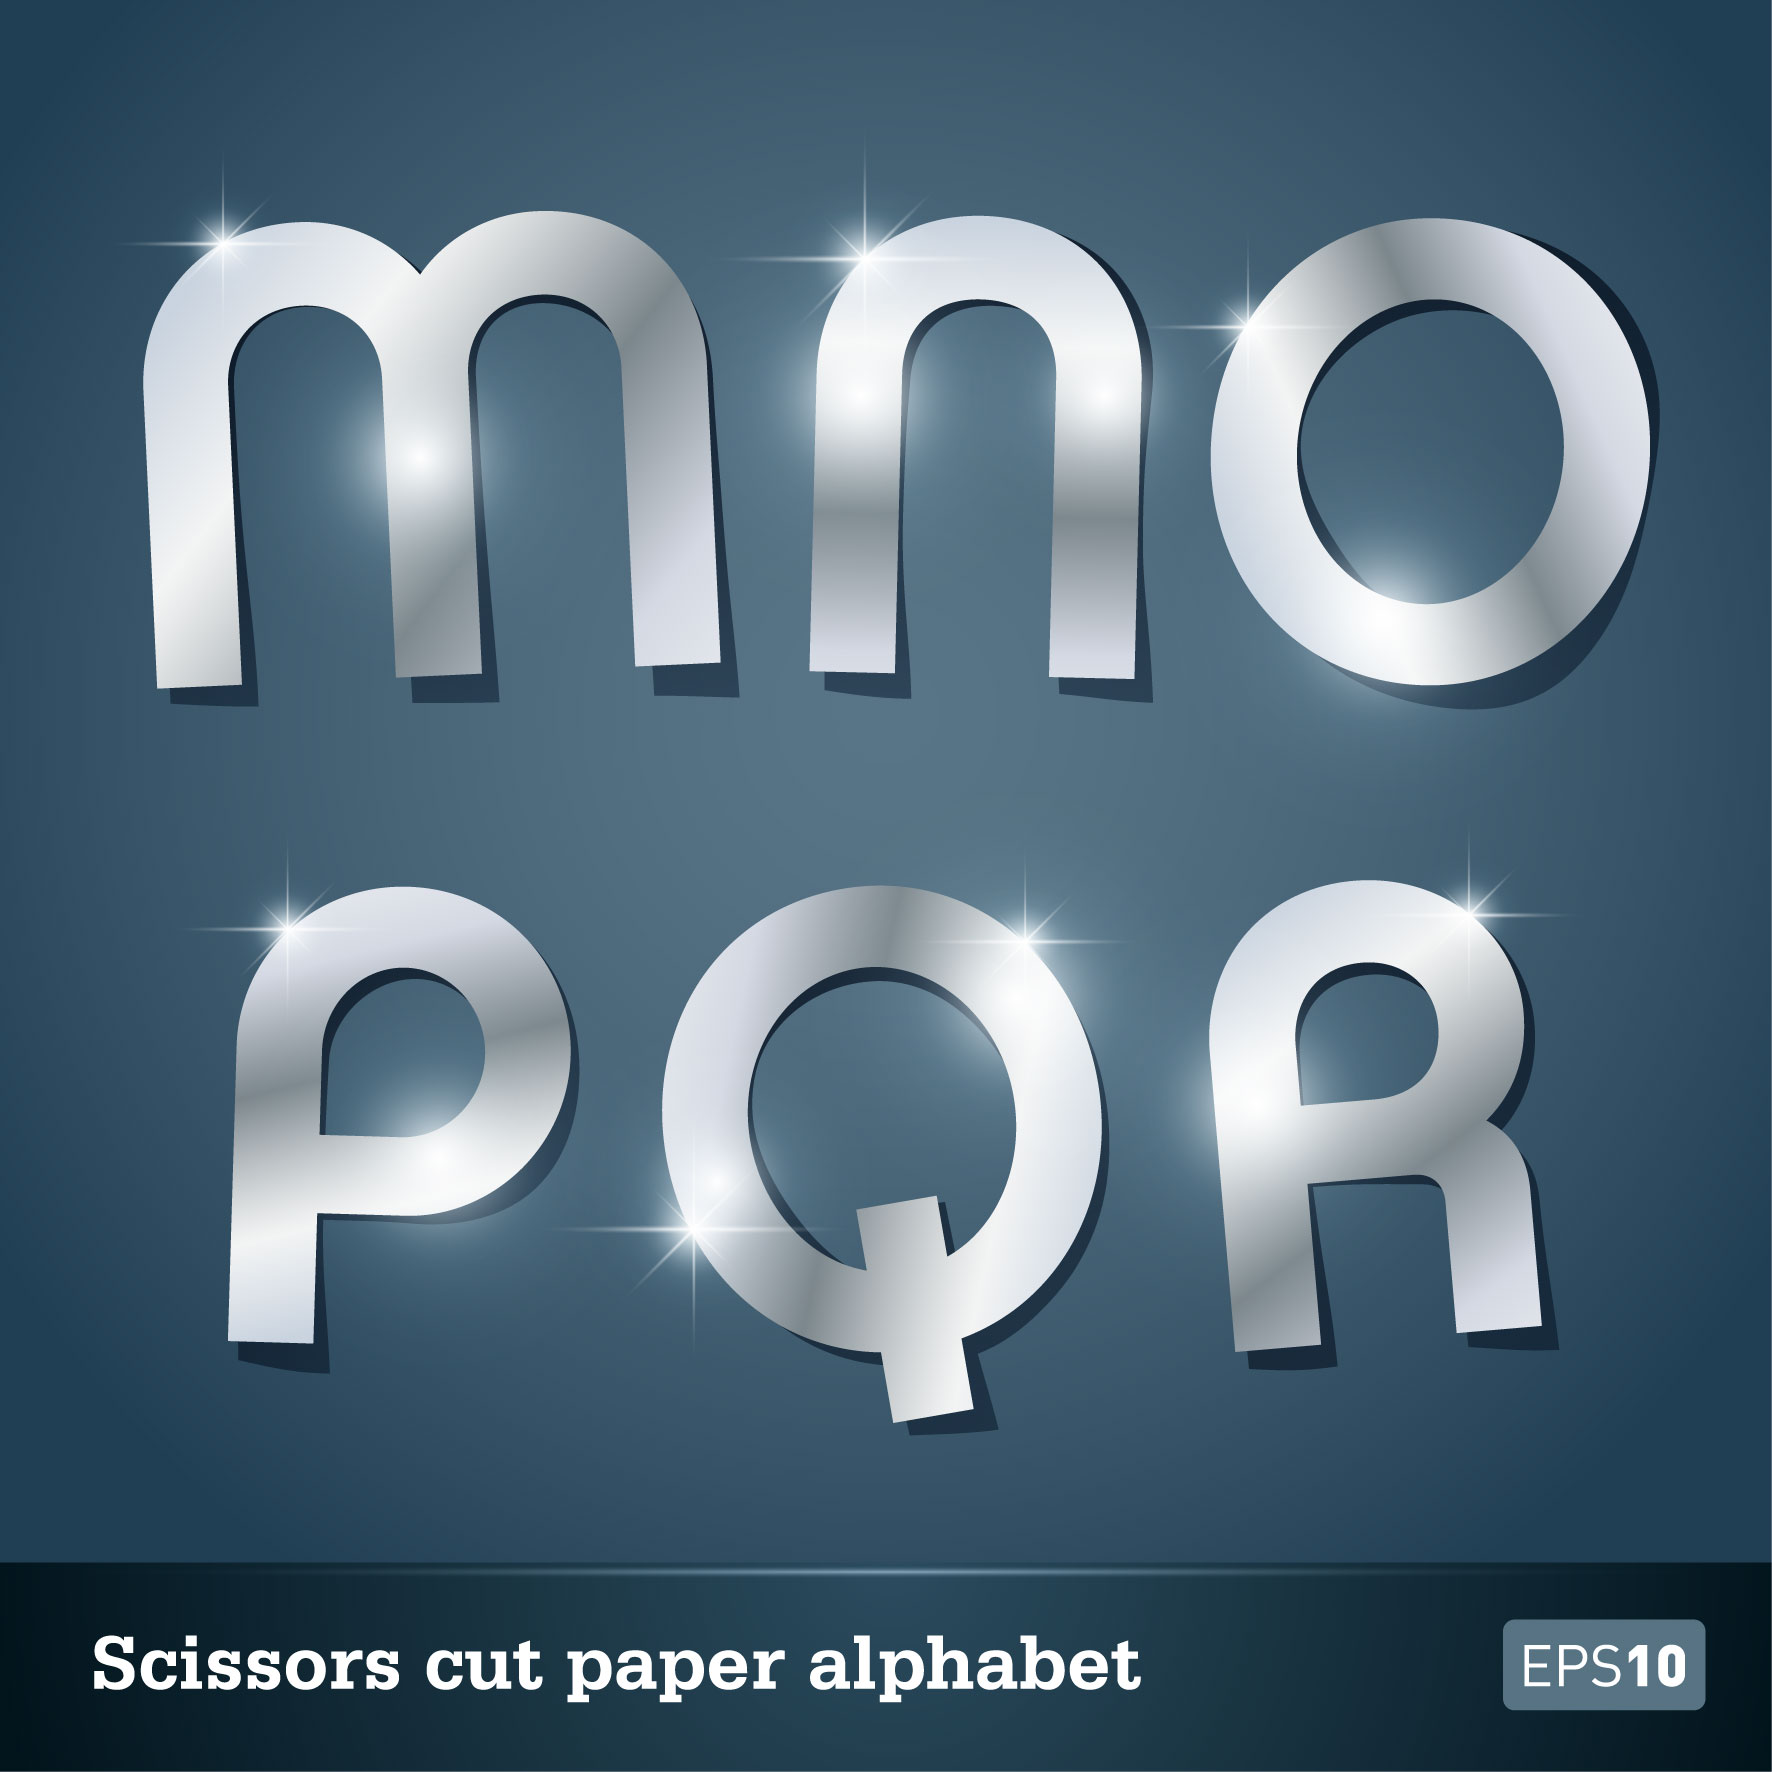 Vektorschere schneidet Papieralphabet Satz 02 Schere papier geschnitten alphabet   